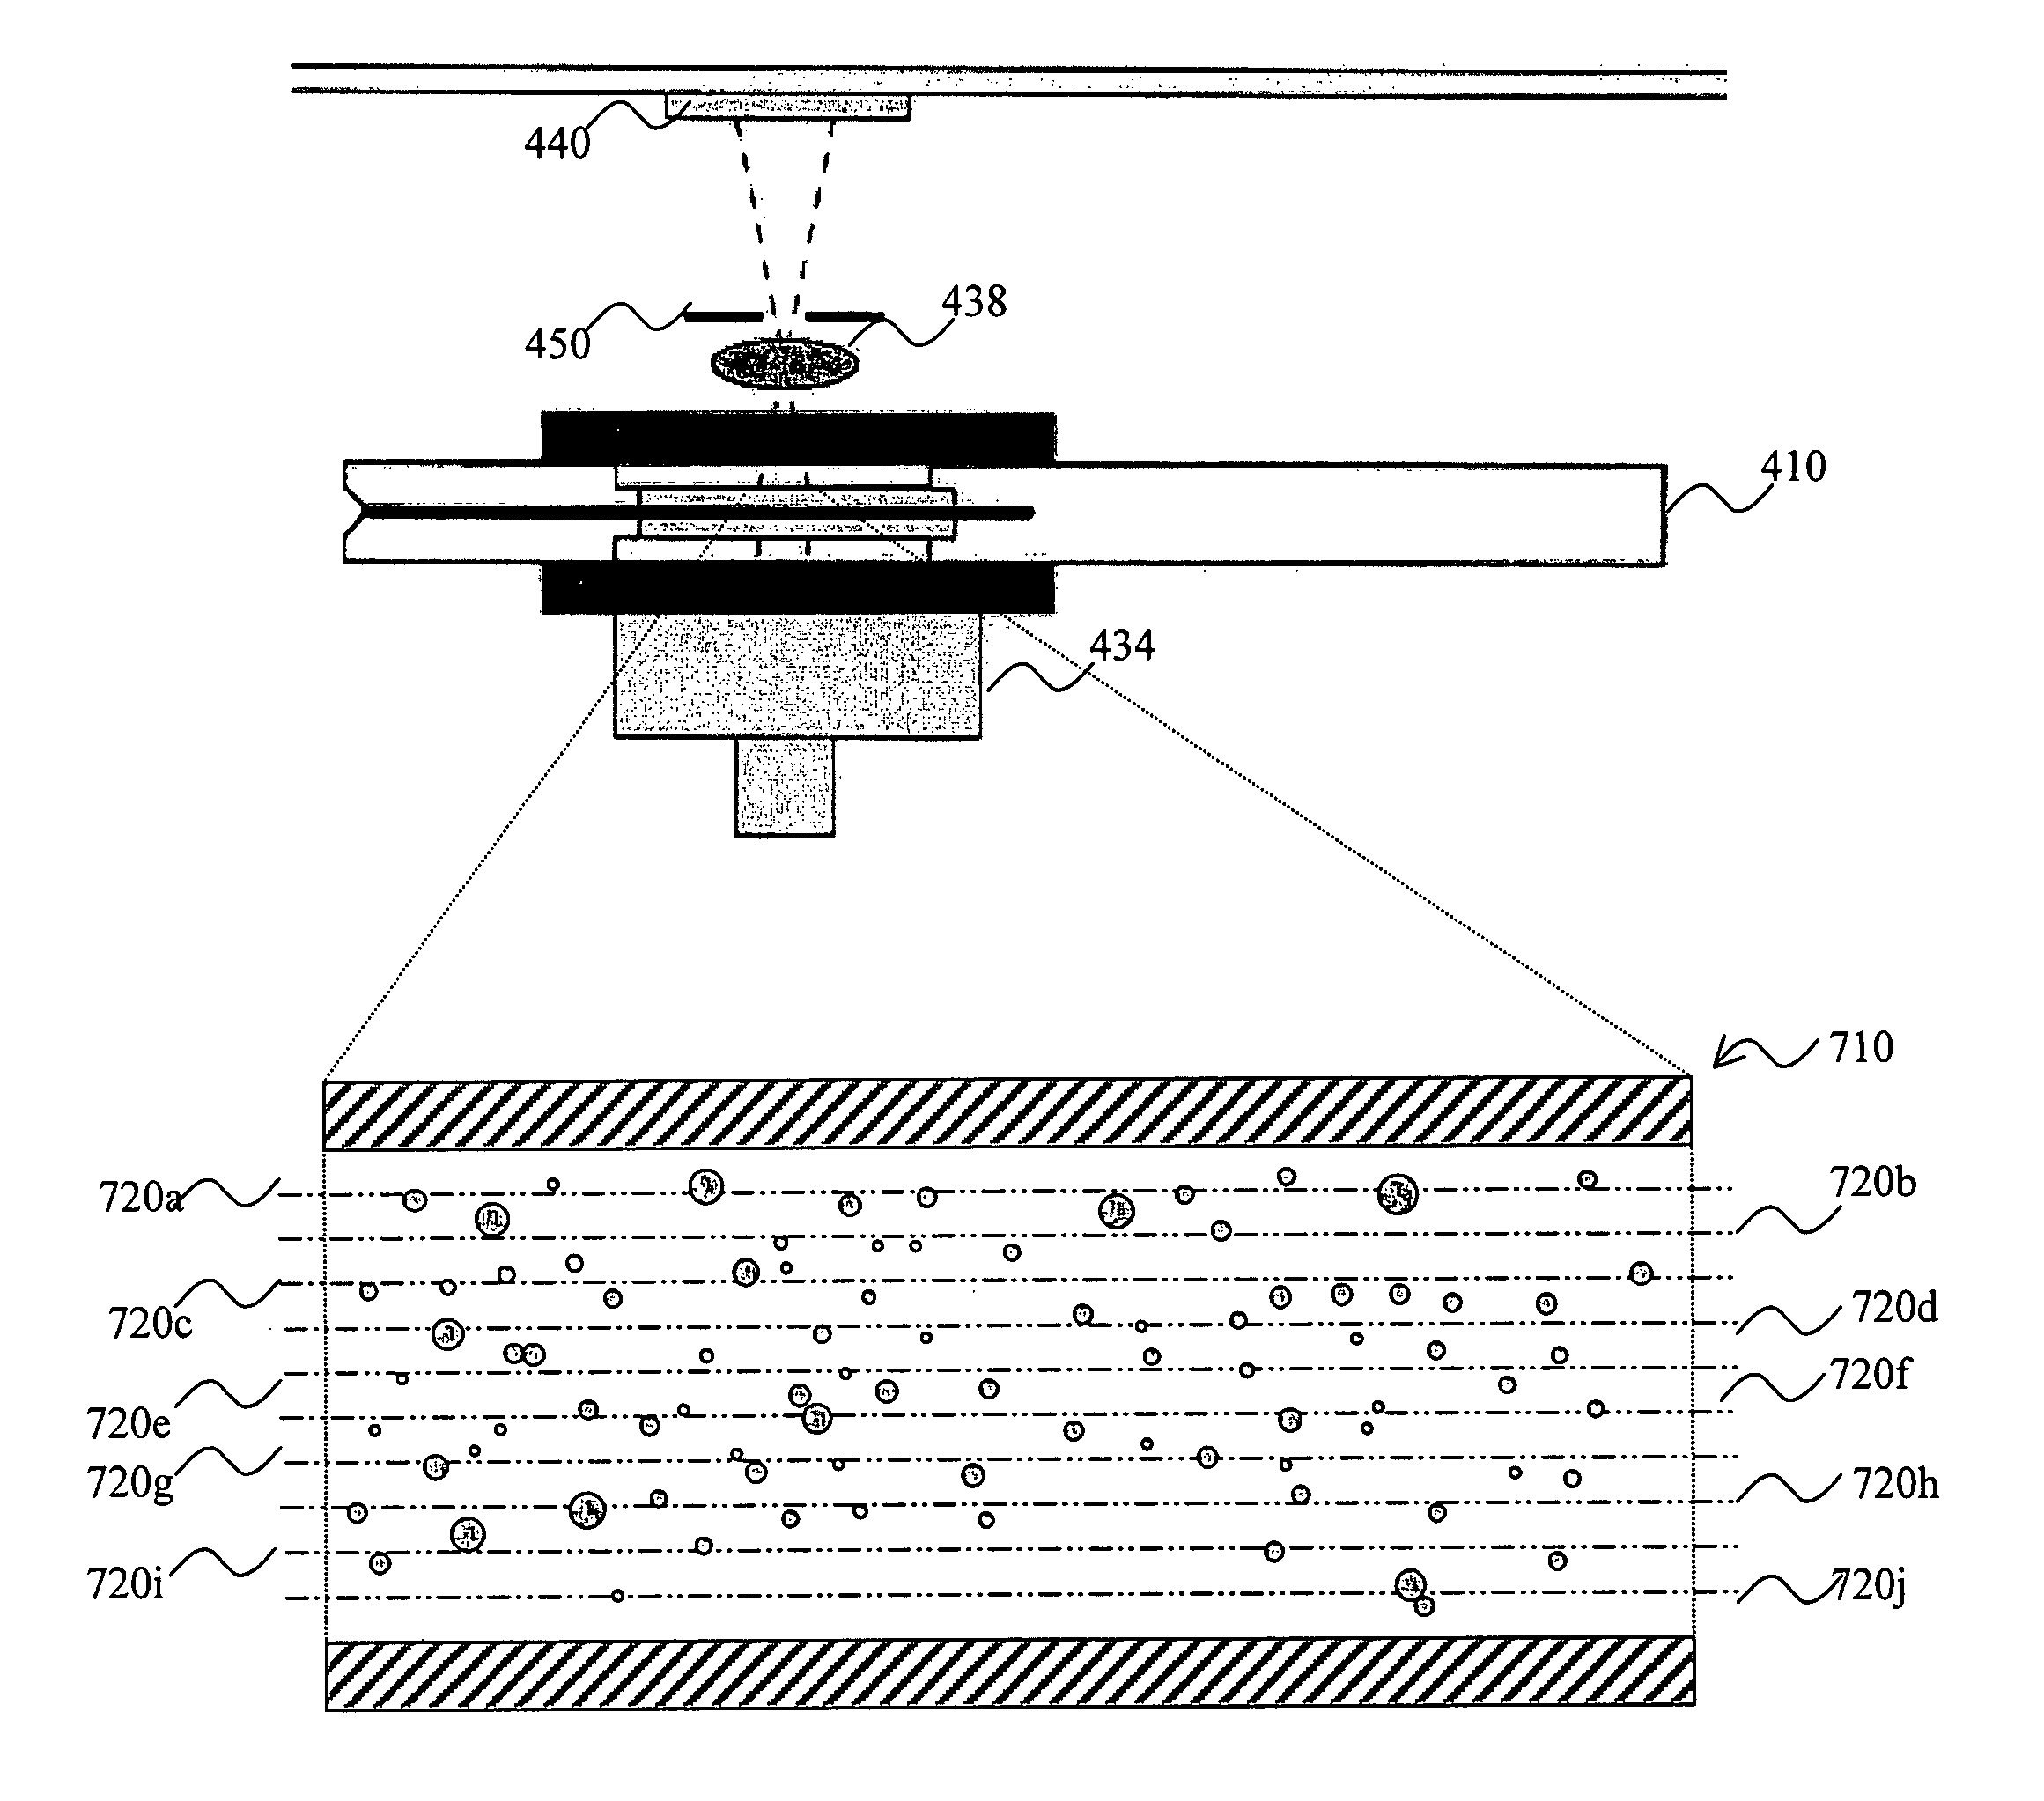 Measurement apparatus, method and computer program